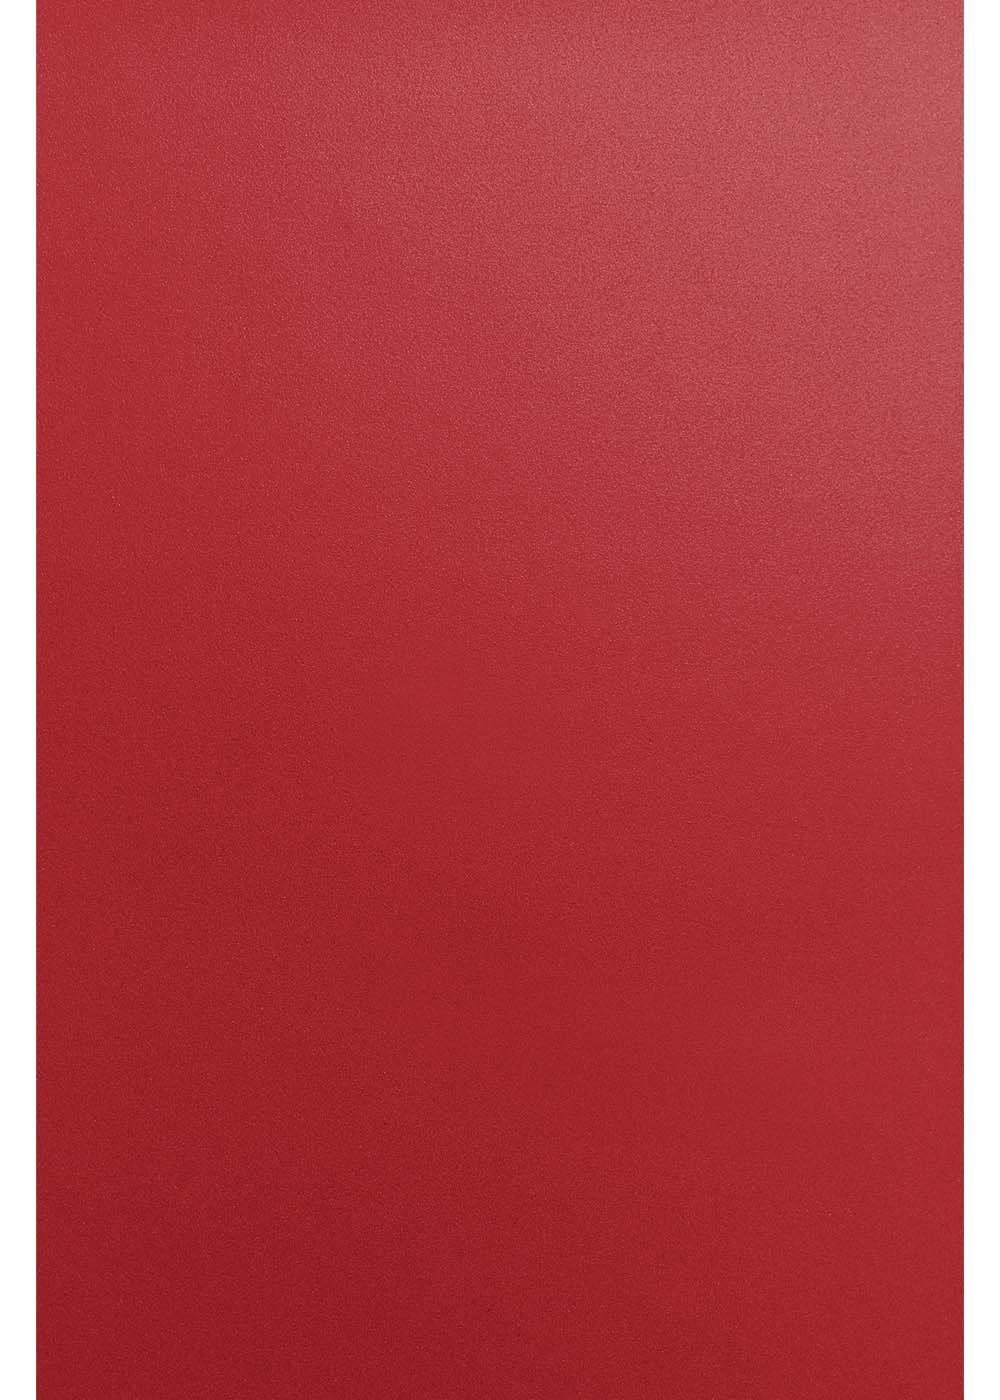 Hilltop Transparentpapier Reflektierende Transferfolie, Textilfolie, mehrfarbig, 30x20 cm Rot | Papier